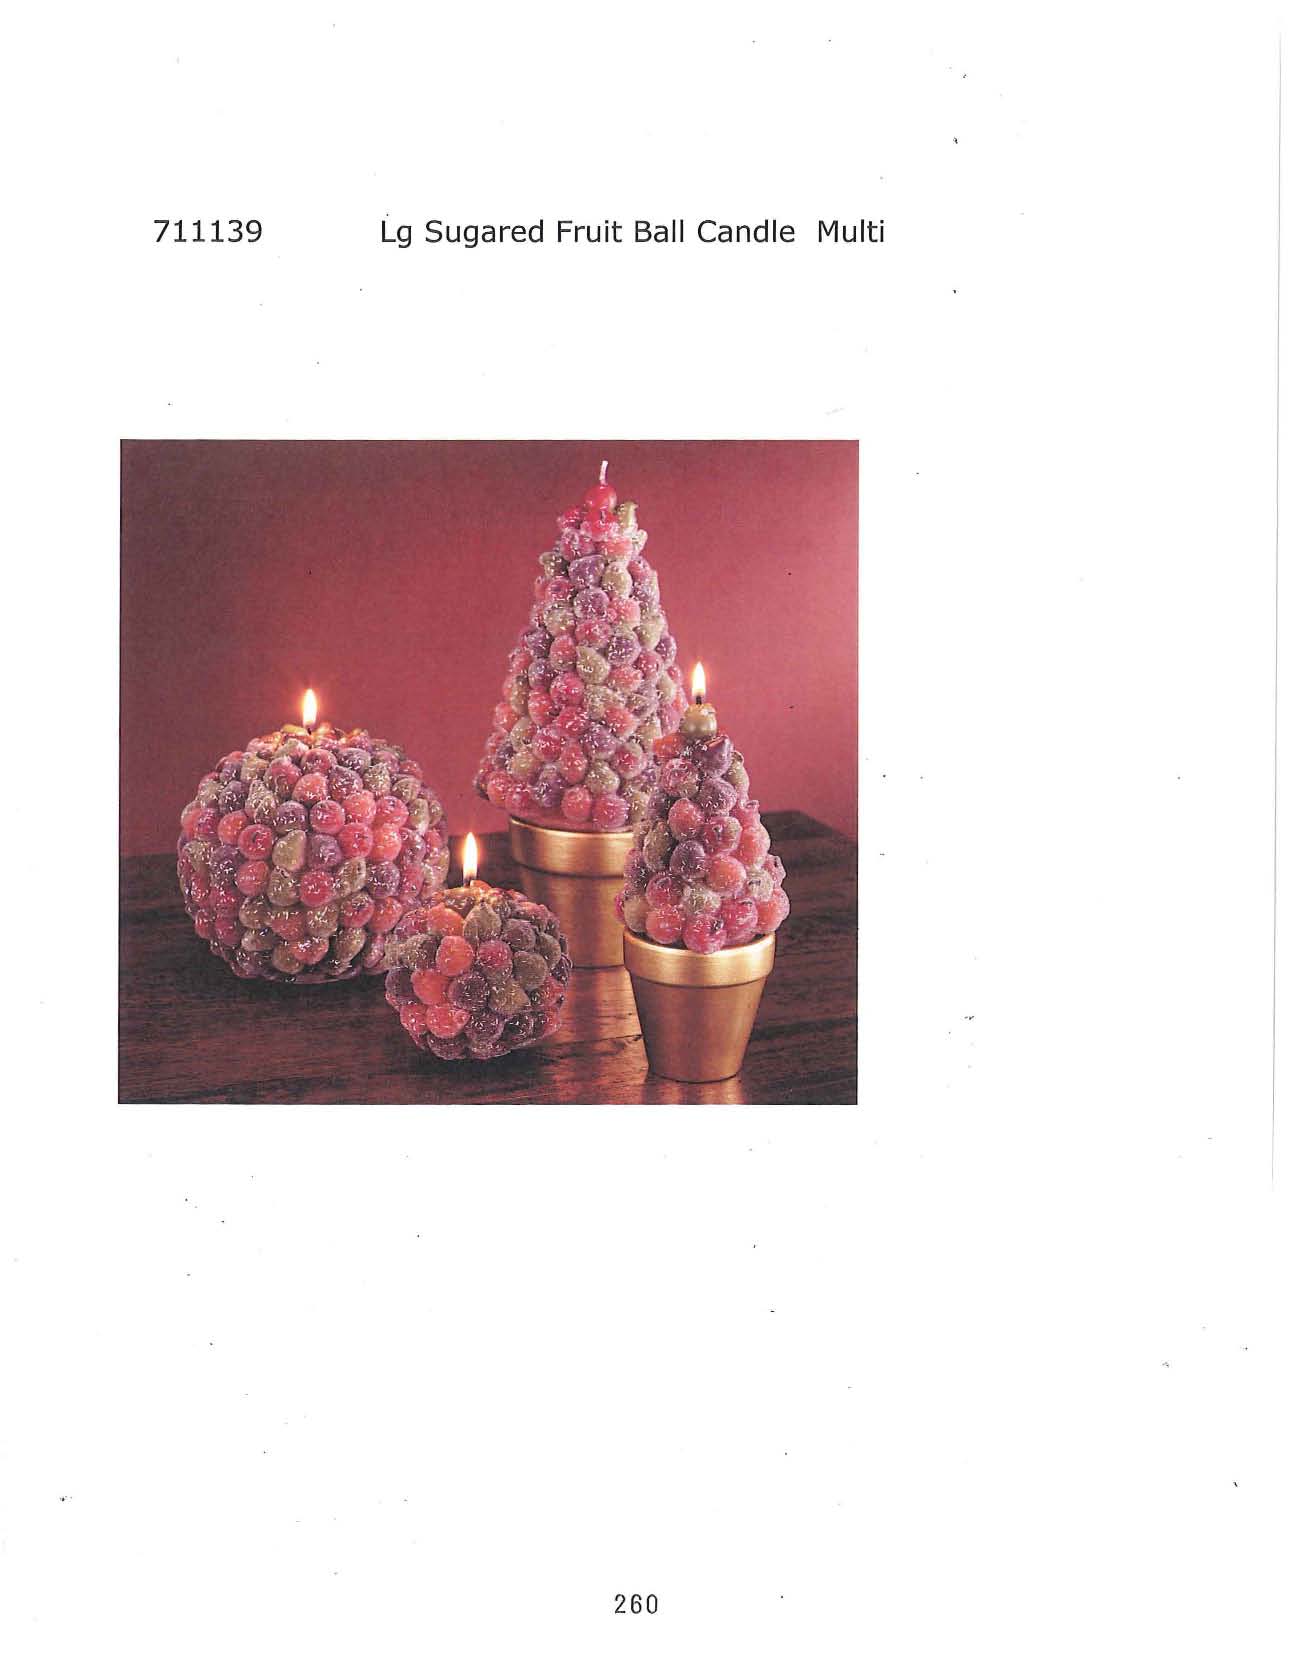 Large Sugared Fruit Ball Candle - Multi